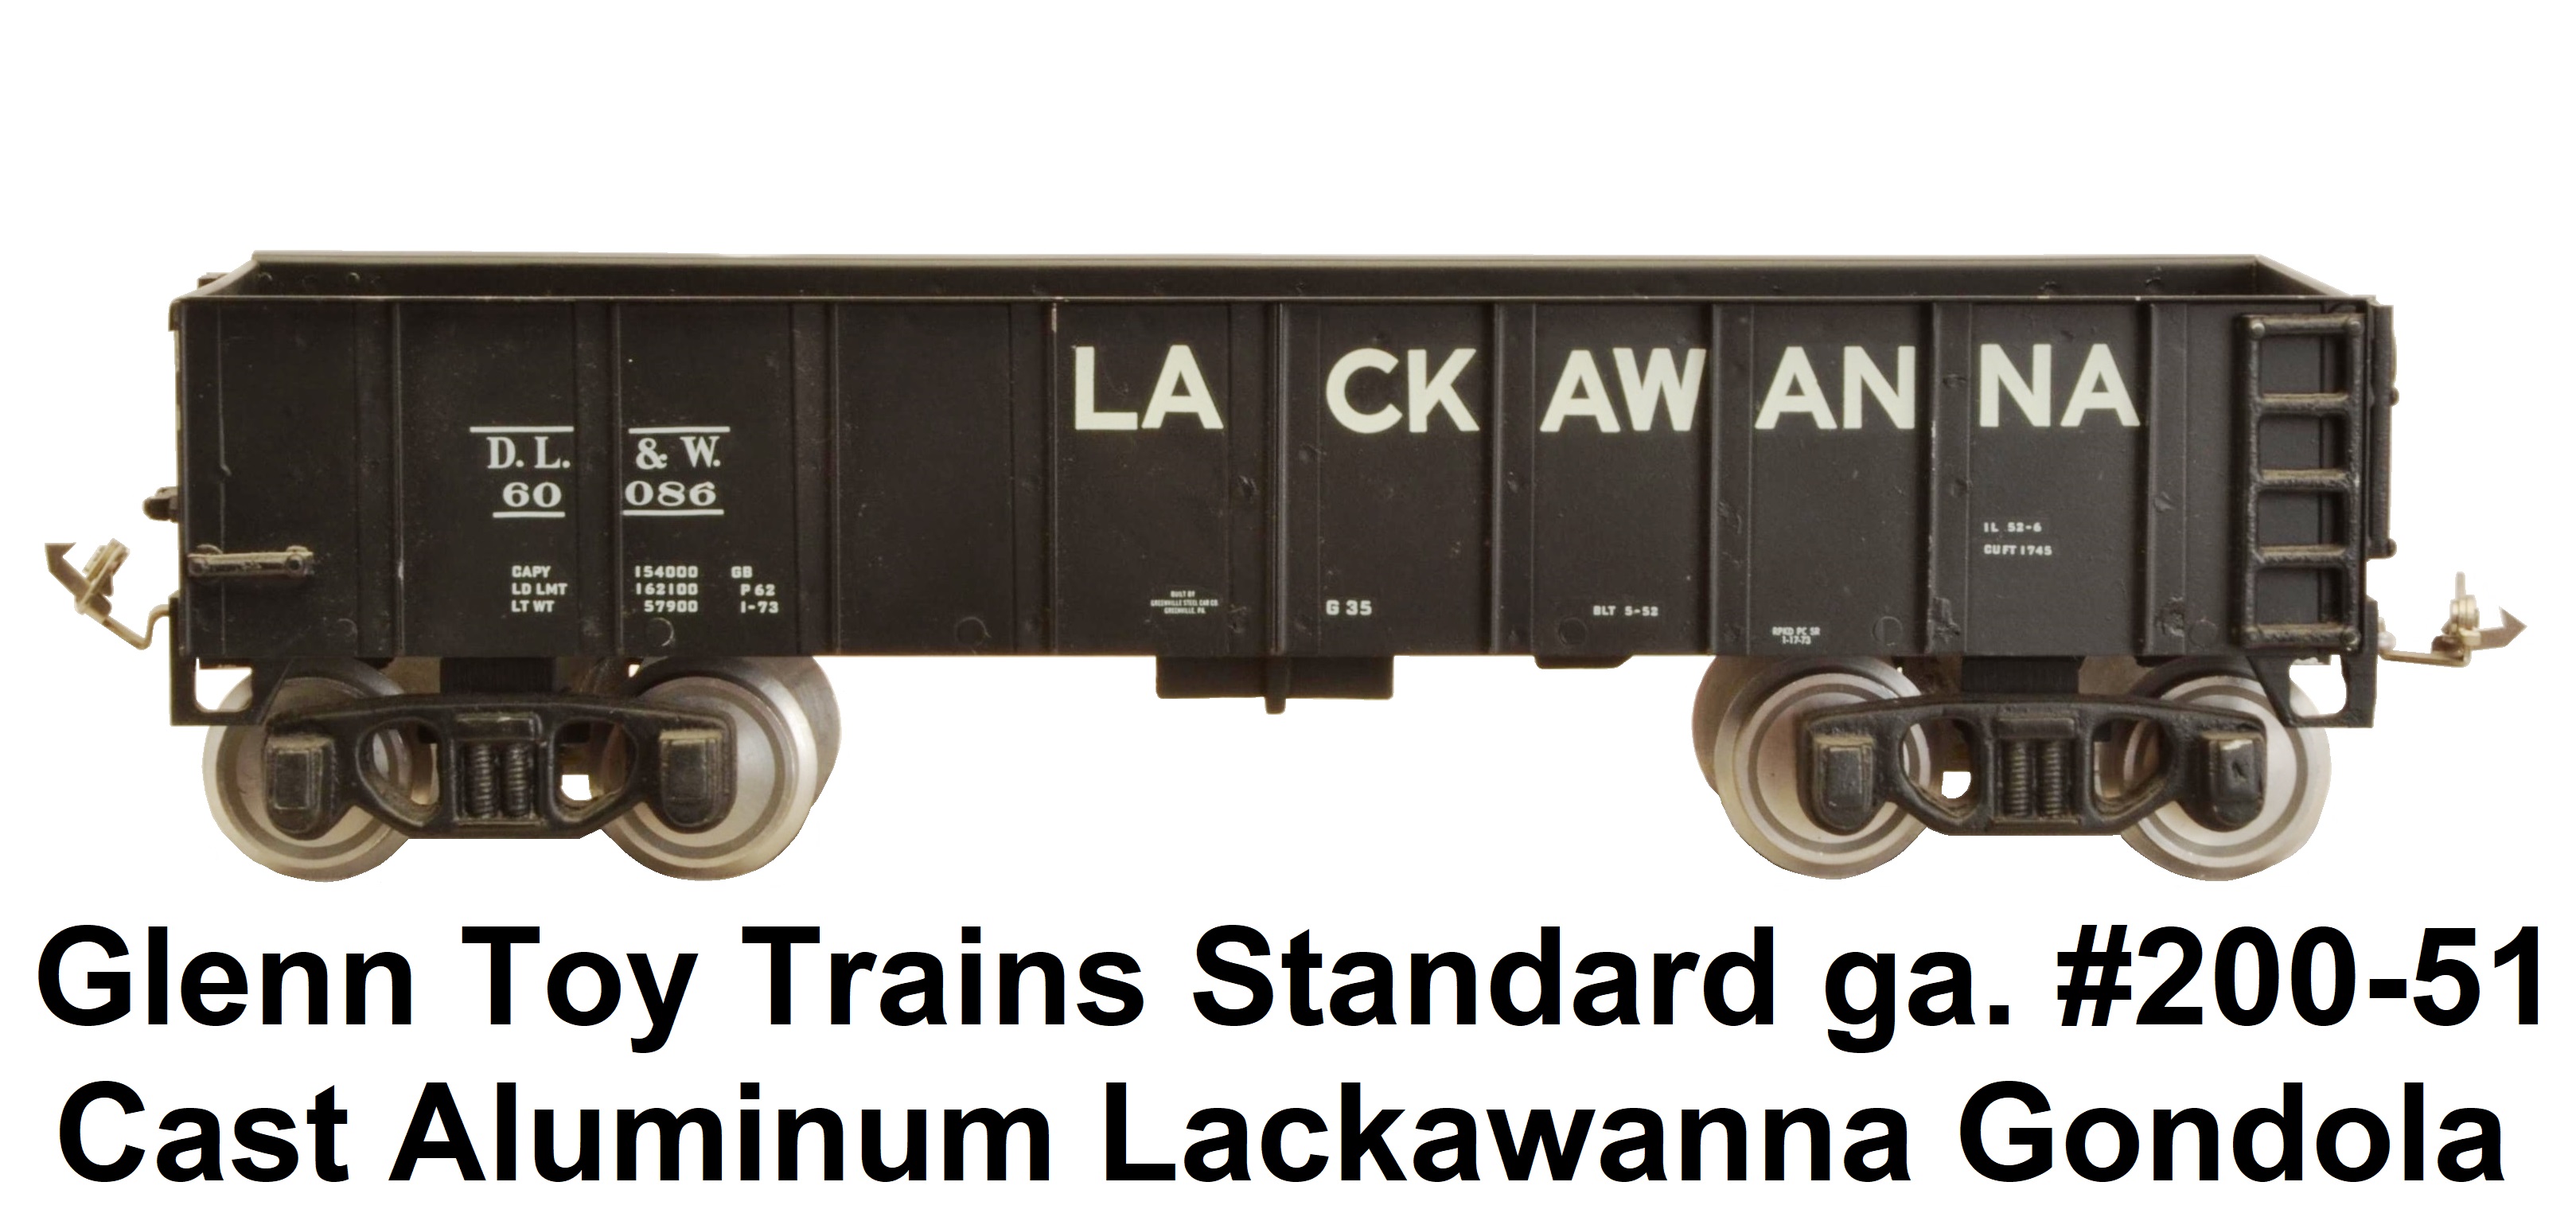 Glenn Toy Trains modern era standard gauge #200-51 cast aluminum and metal black Lackawanna gondola numbered 60086